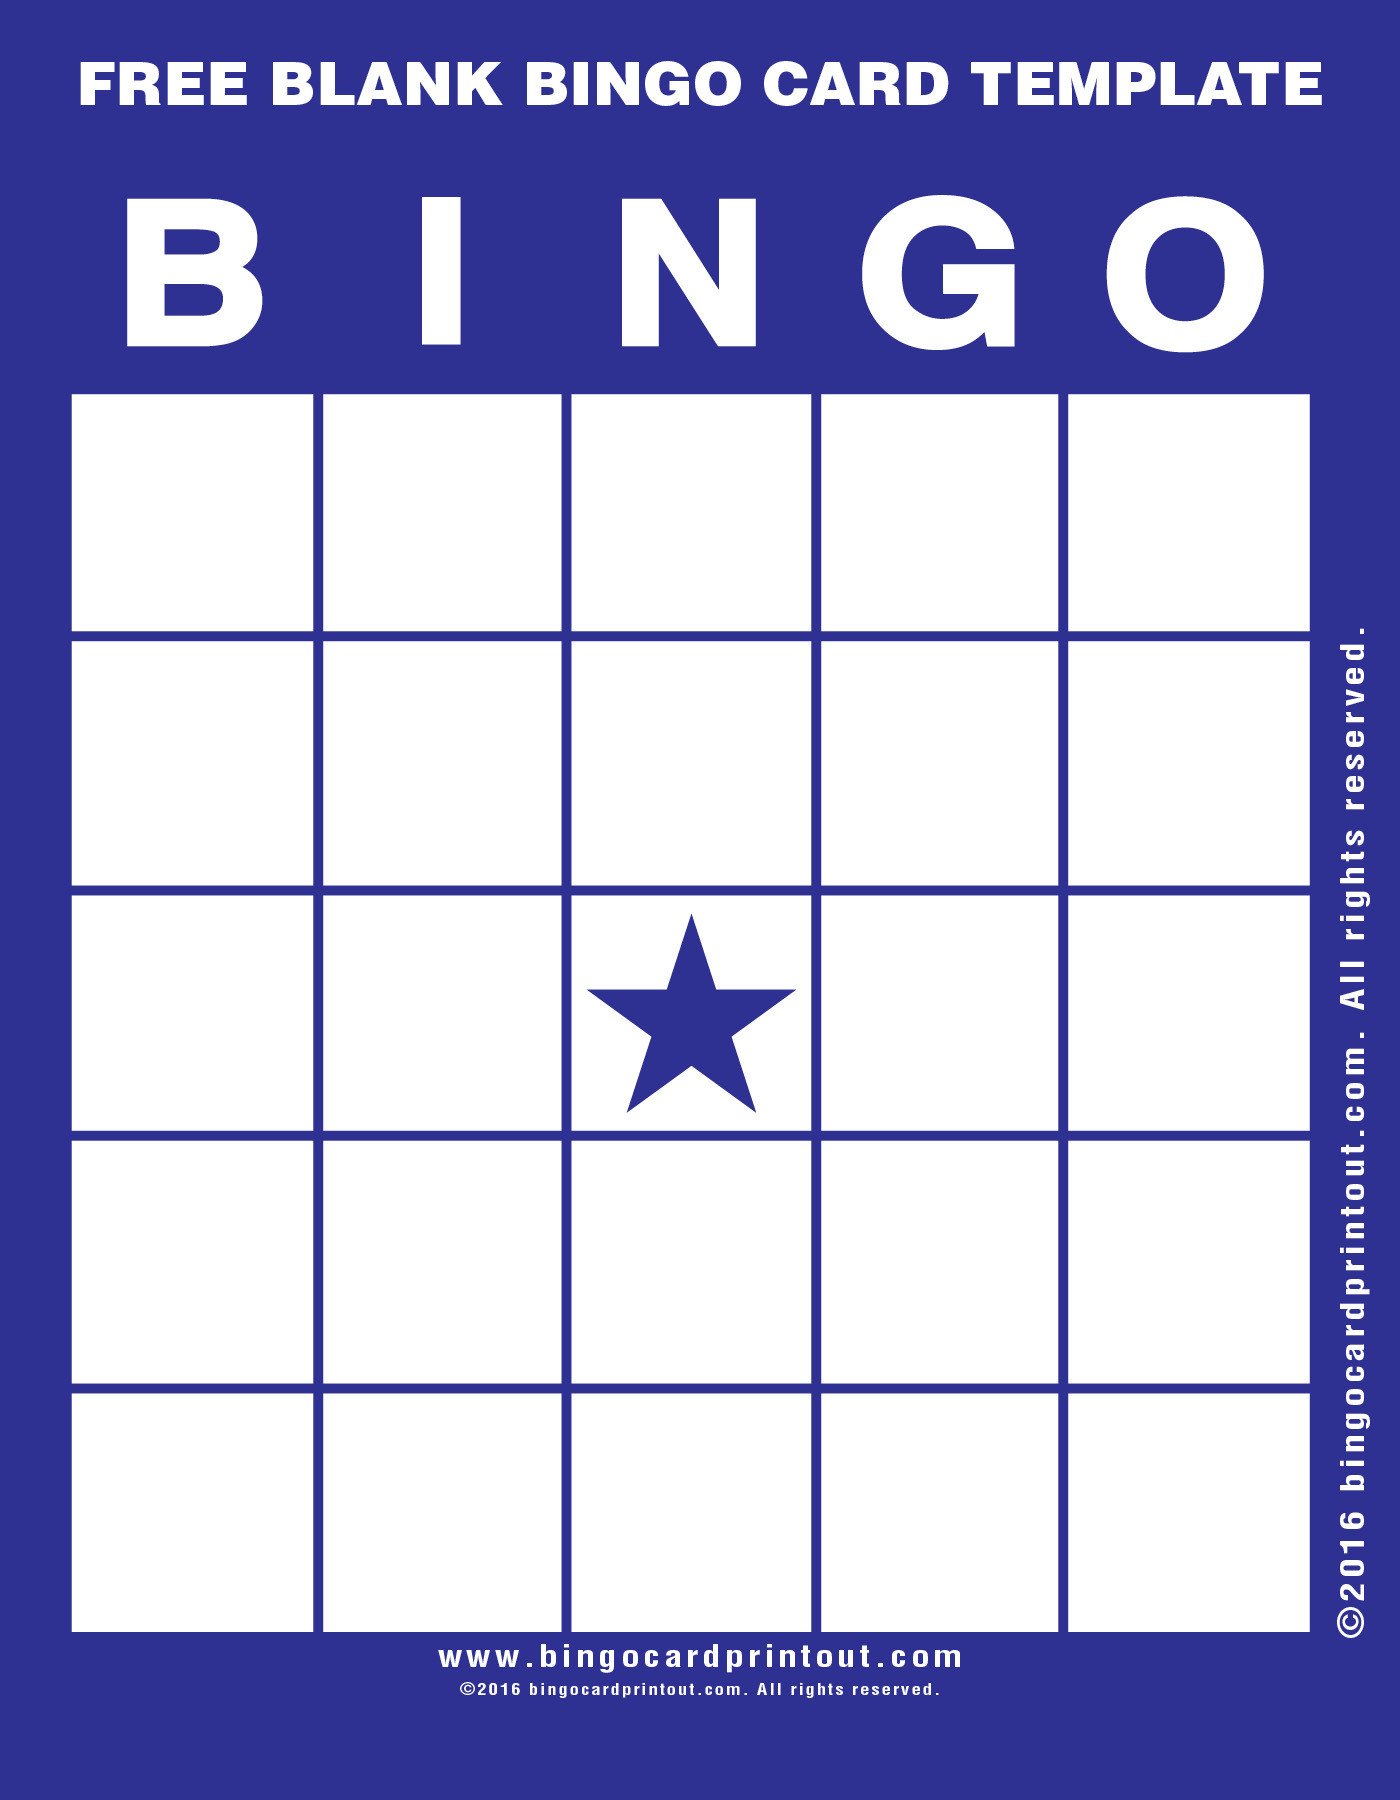 Blank Bingo Card Template Free Blank Bingo Card Template Bingocardprintout